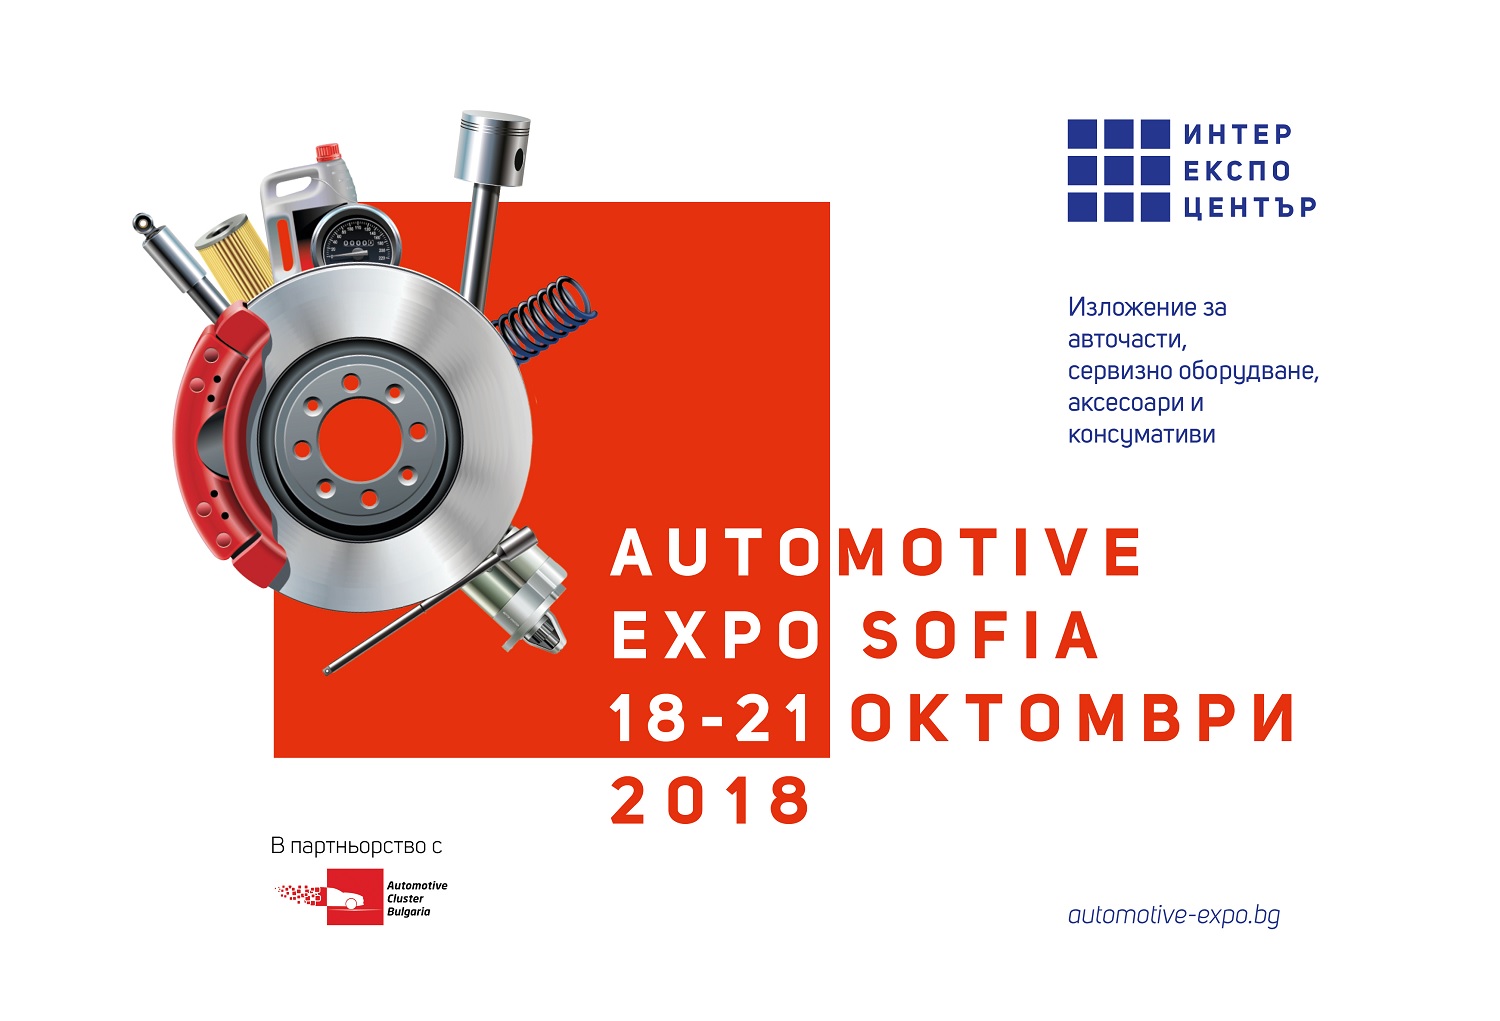 Automotive Forum & Expo Sofia 2018 - 18 – 21 oктомври 2018 г.